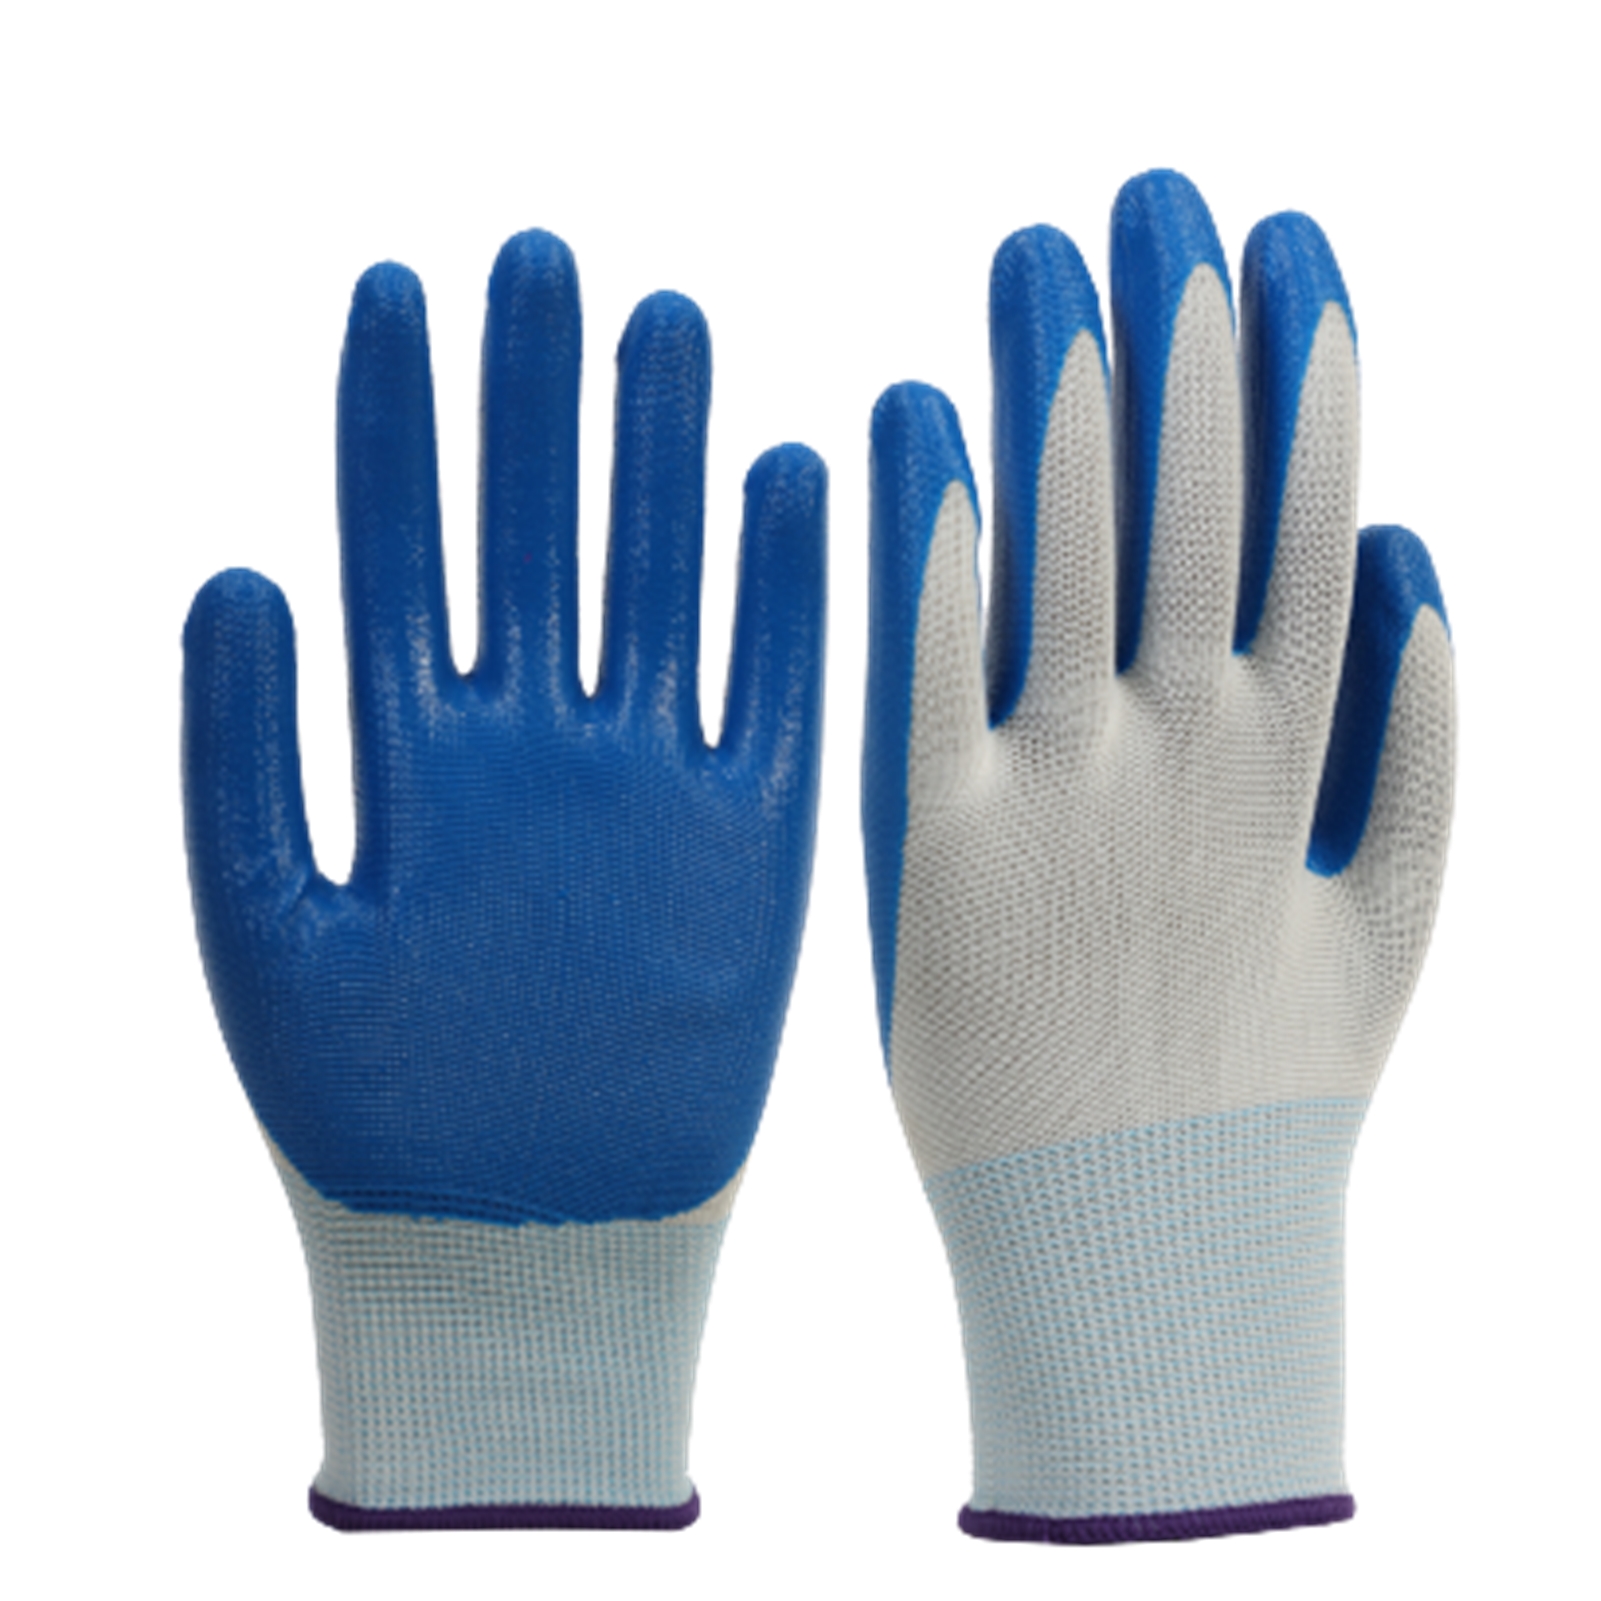 Nylon Nitrile Protective Gloves,Nitrile Coated Work Gloves ,Suitable For Warehousing, Logistics, Handling, Automotive